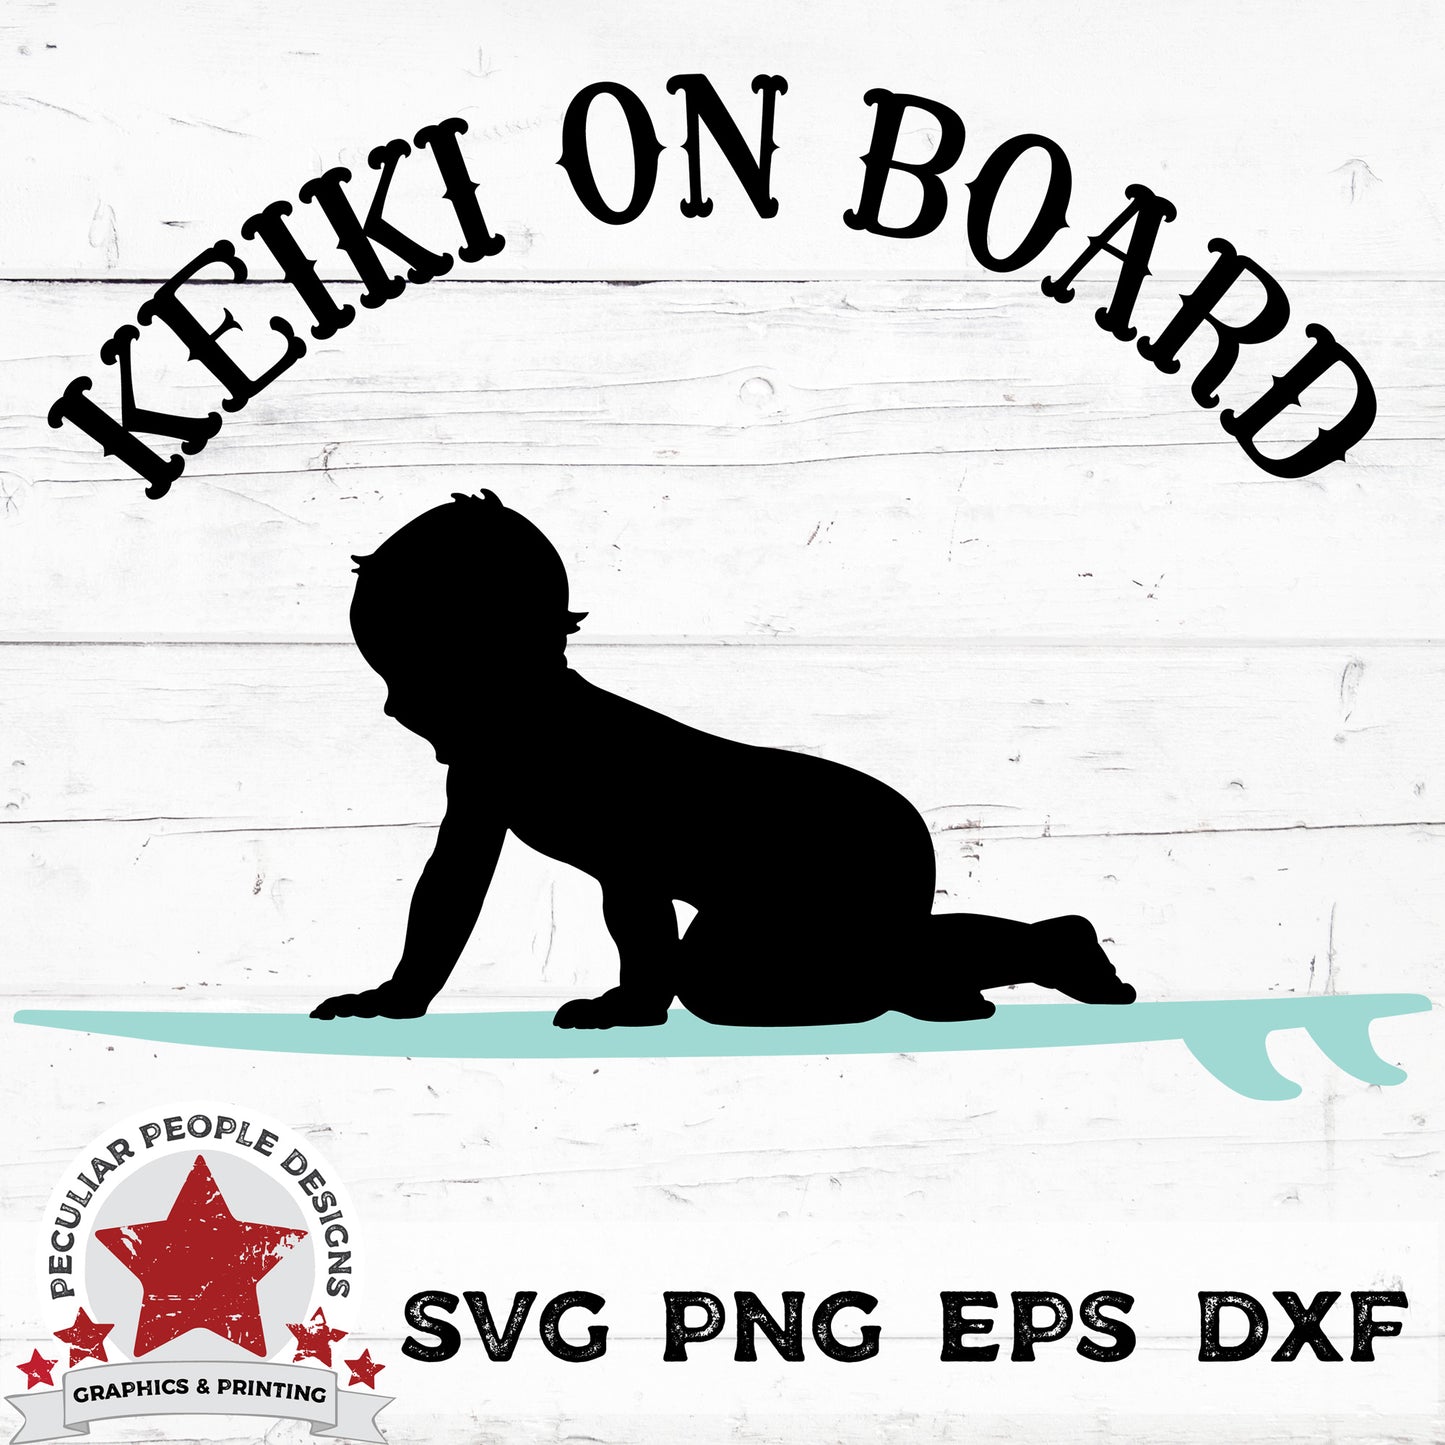 a hawaiian surfer, baby boy on surfboard vector design with text "keiki on board"